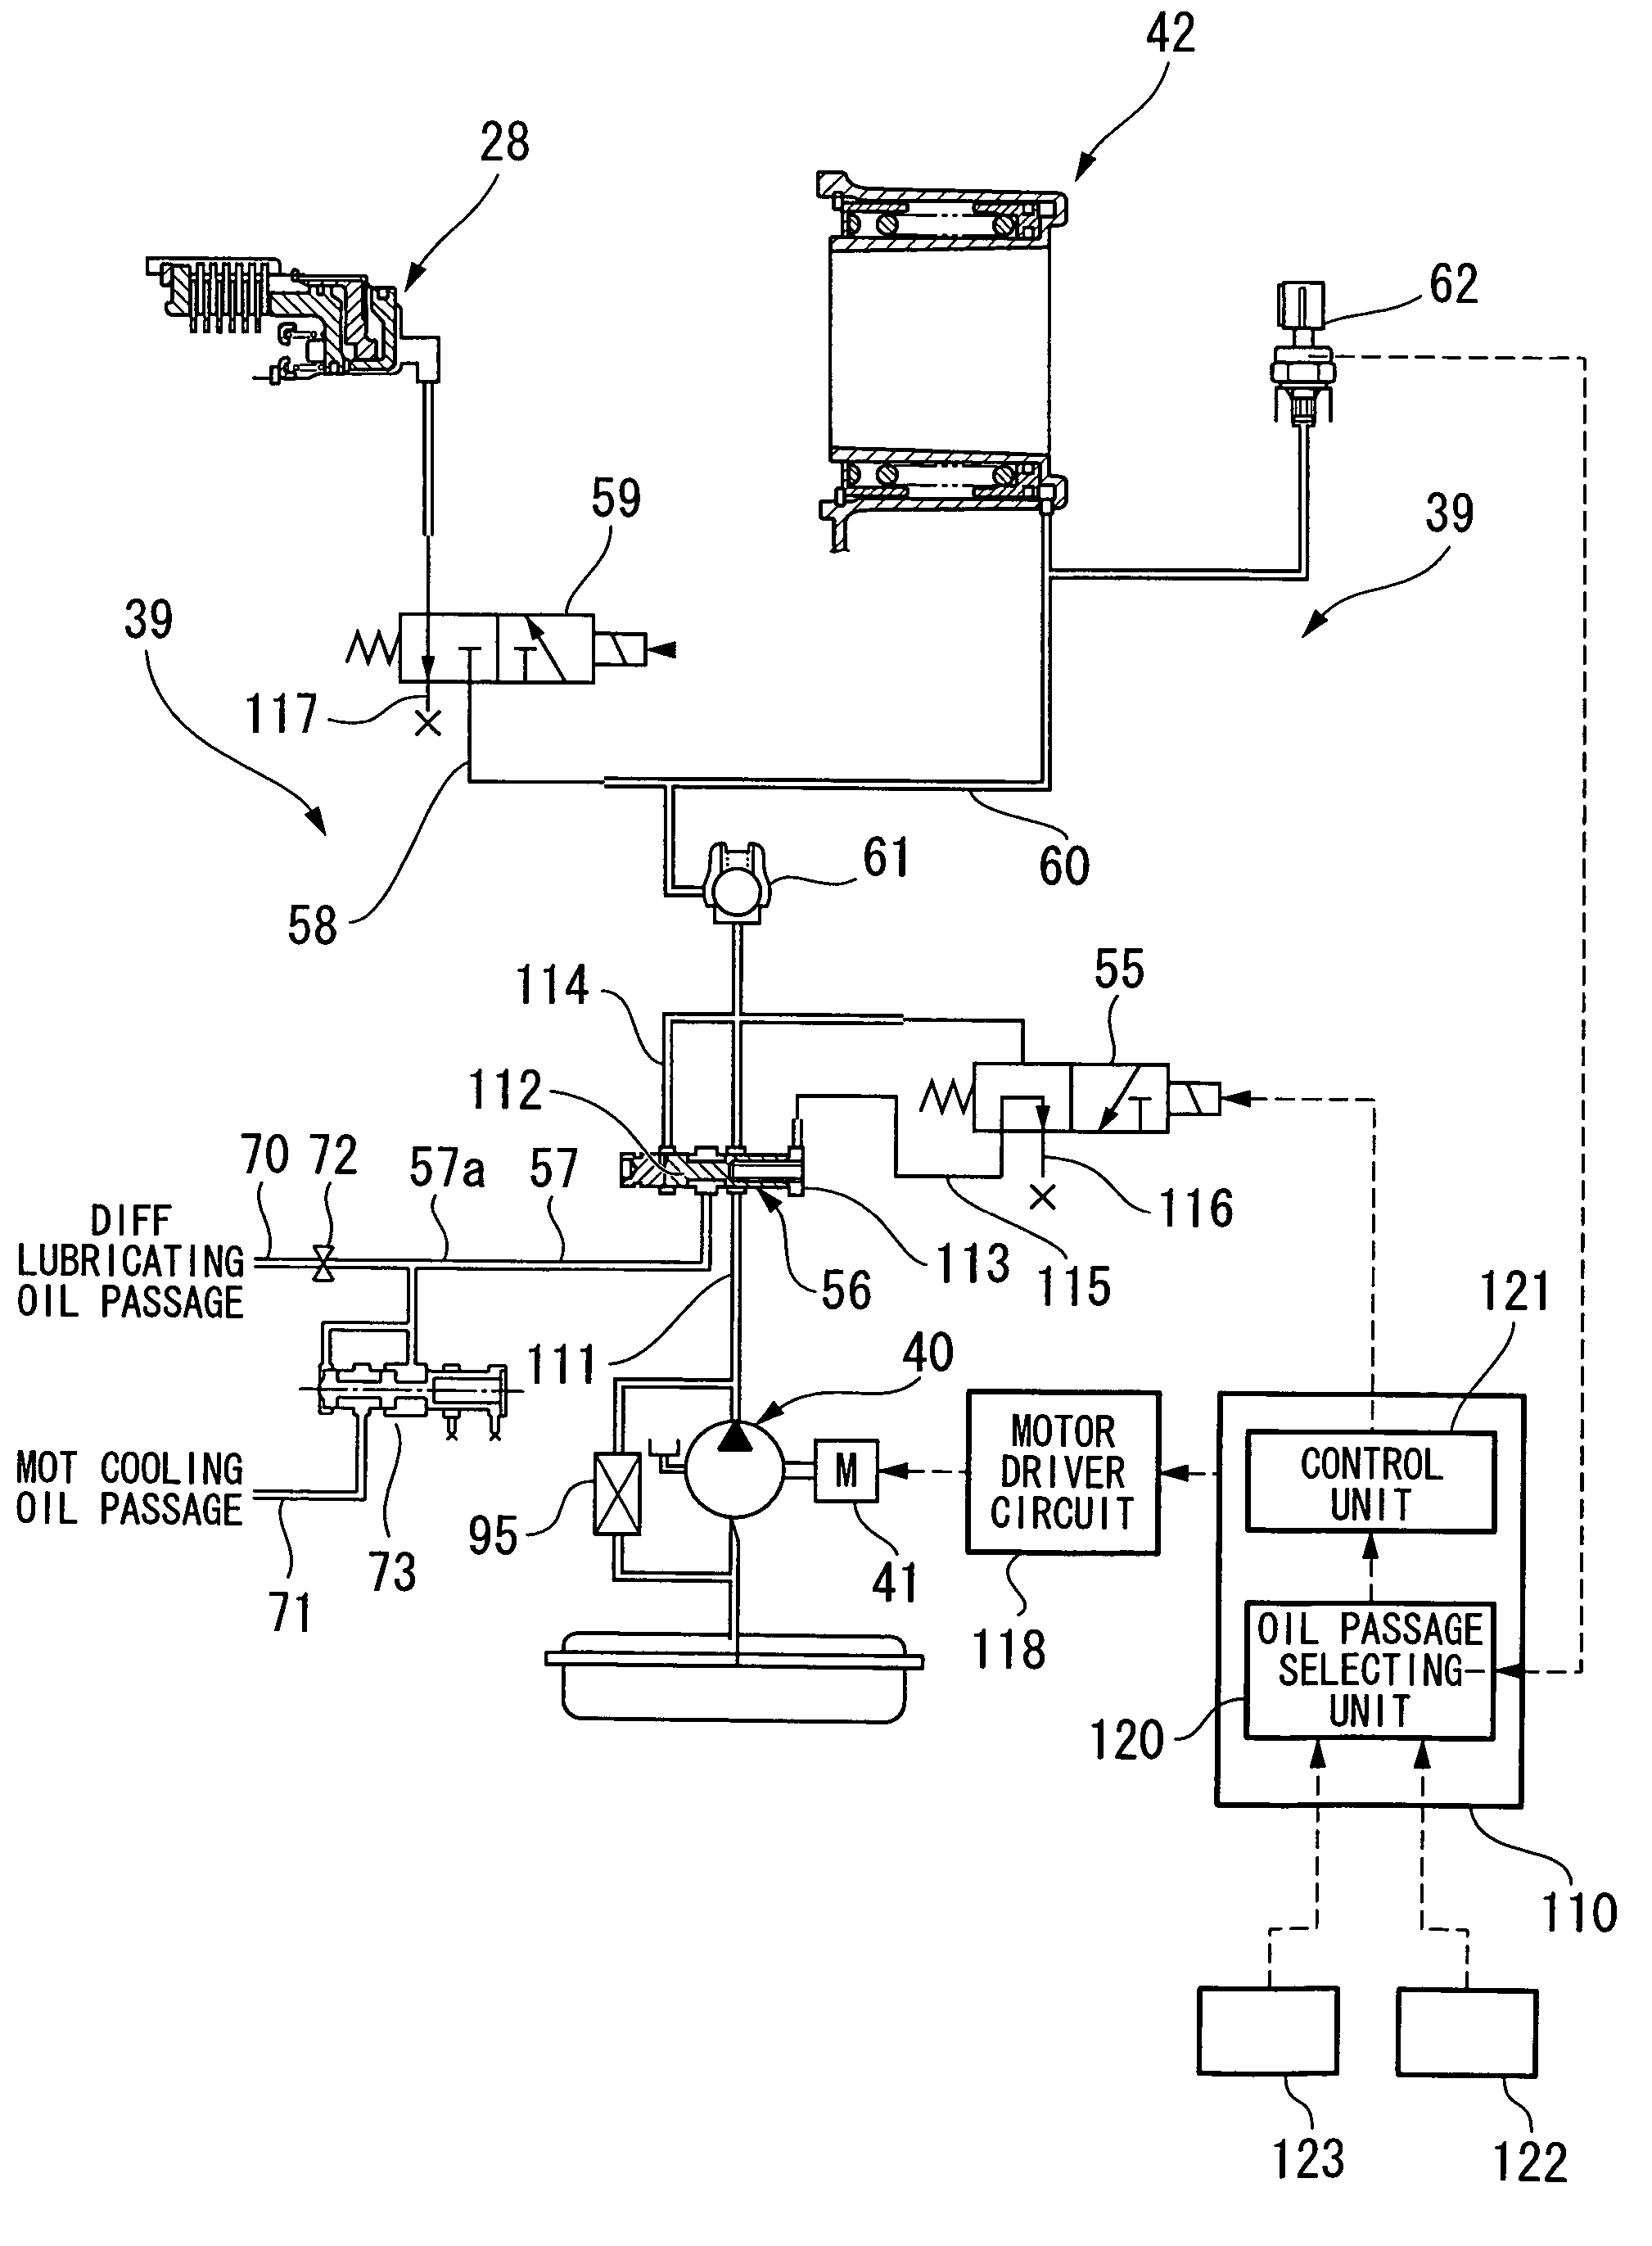 Hydraulic circuit control device